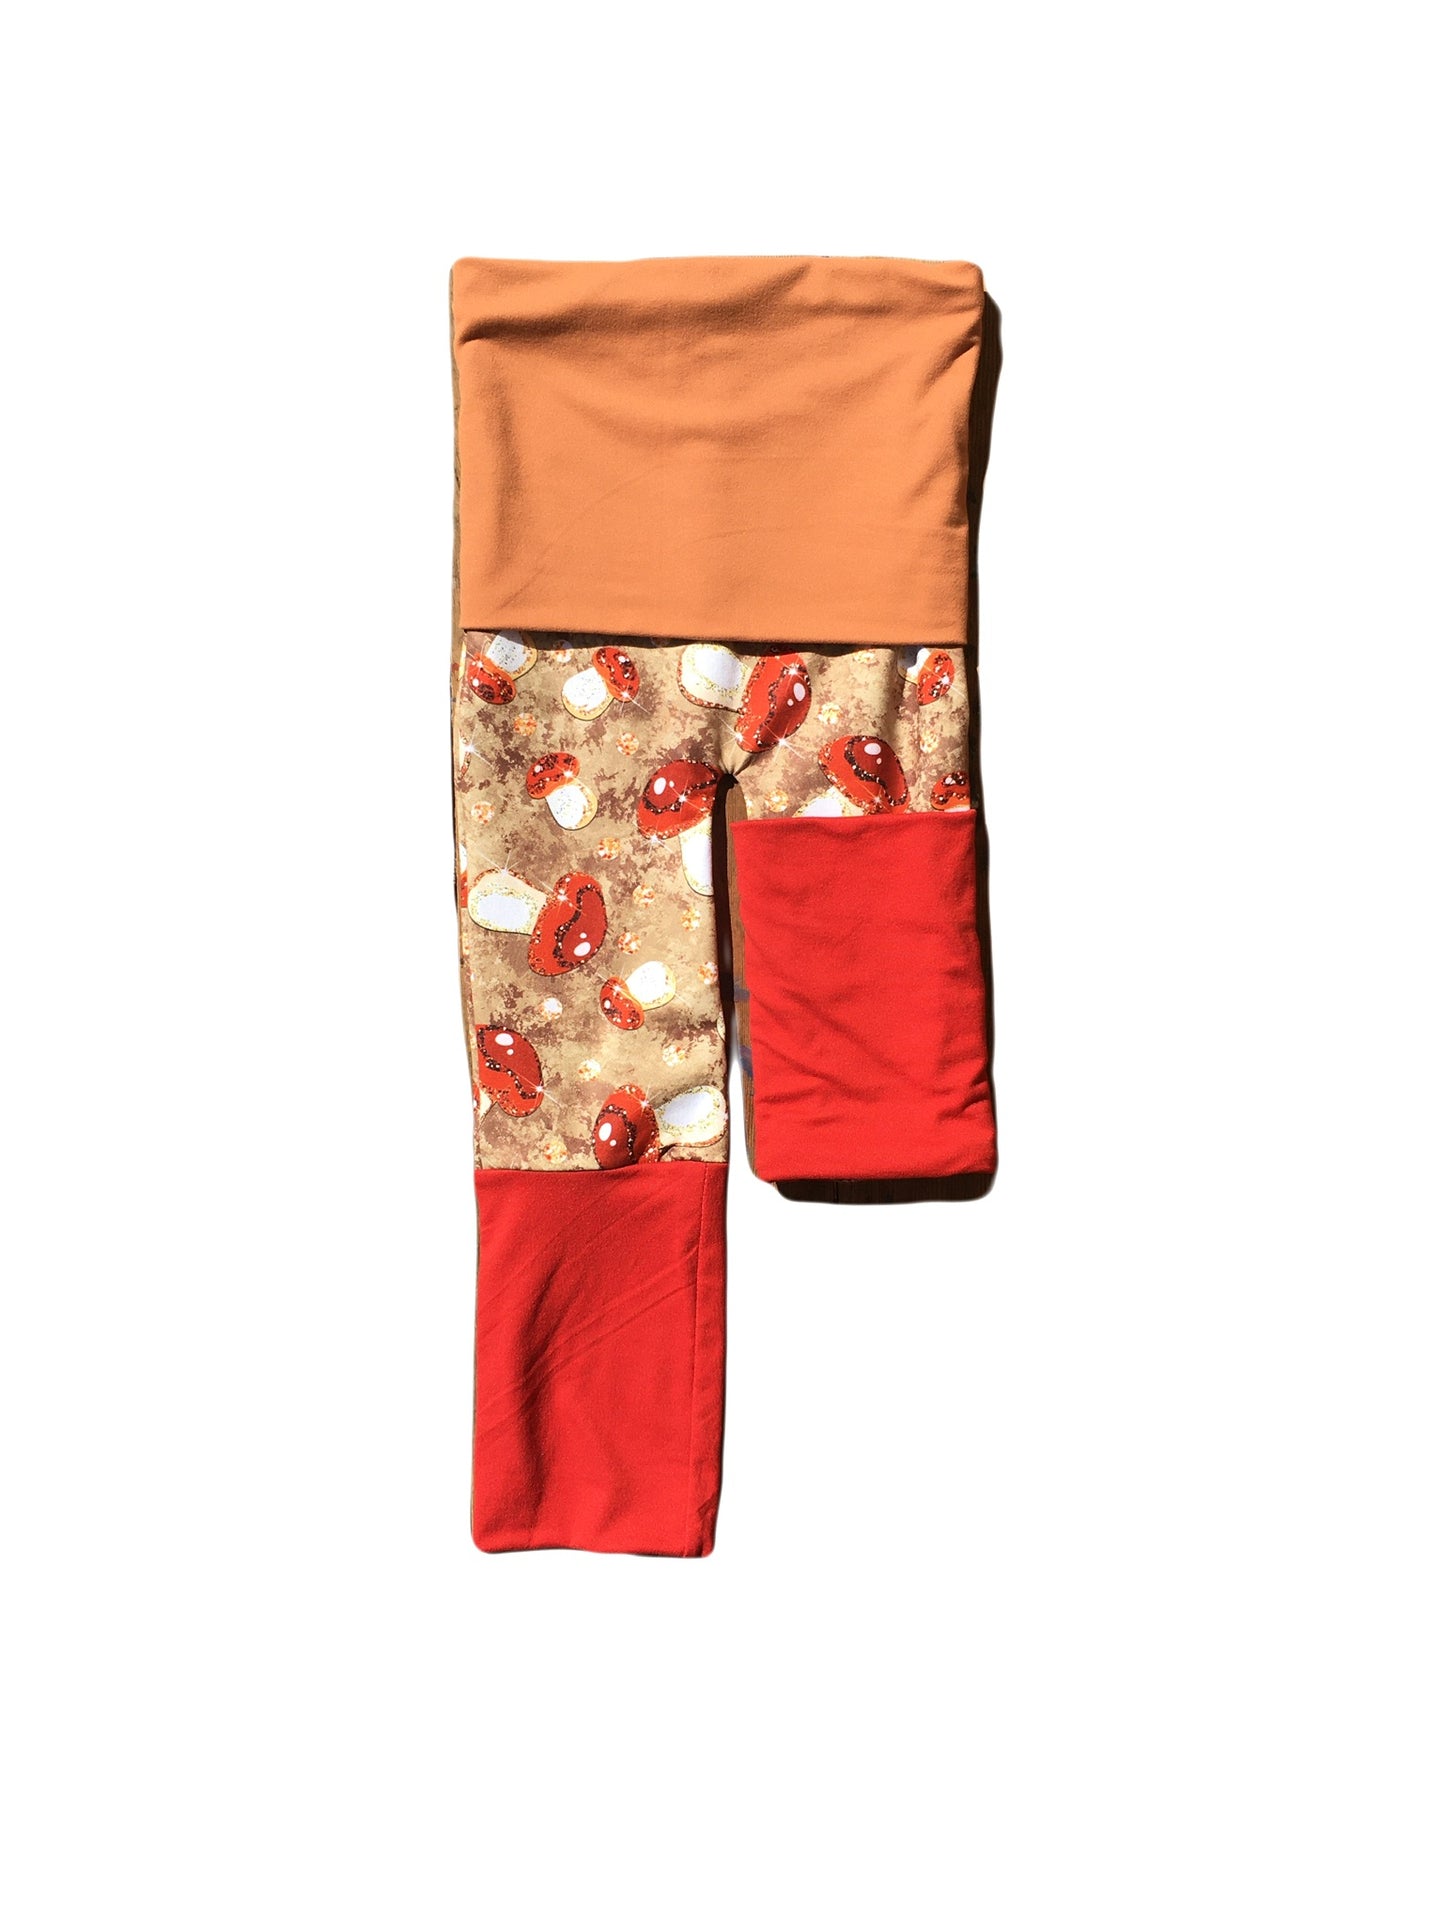 Adjustable Pants - Amanitas with Orange & Rust